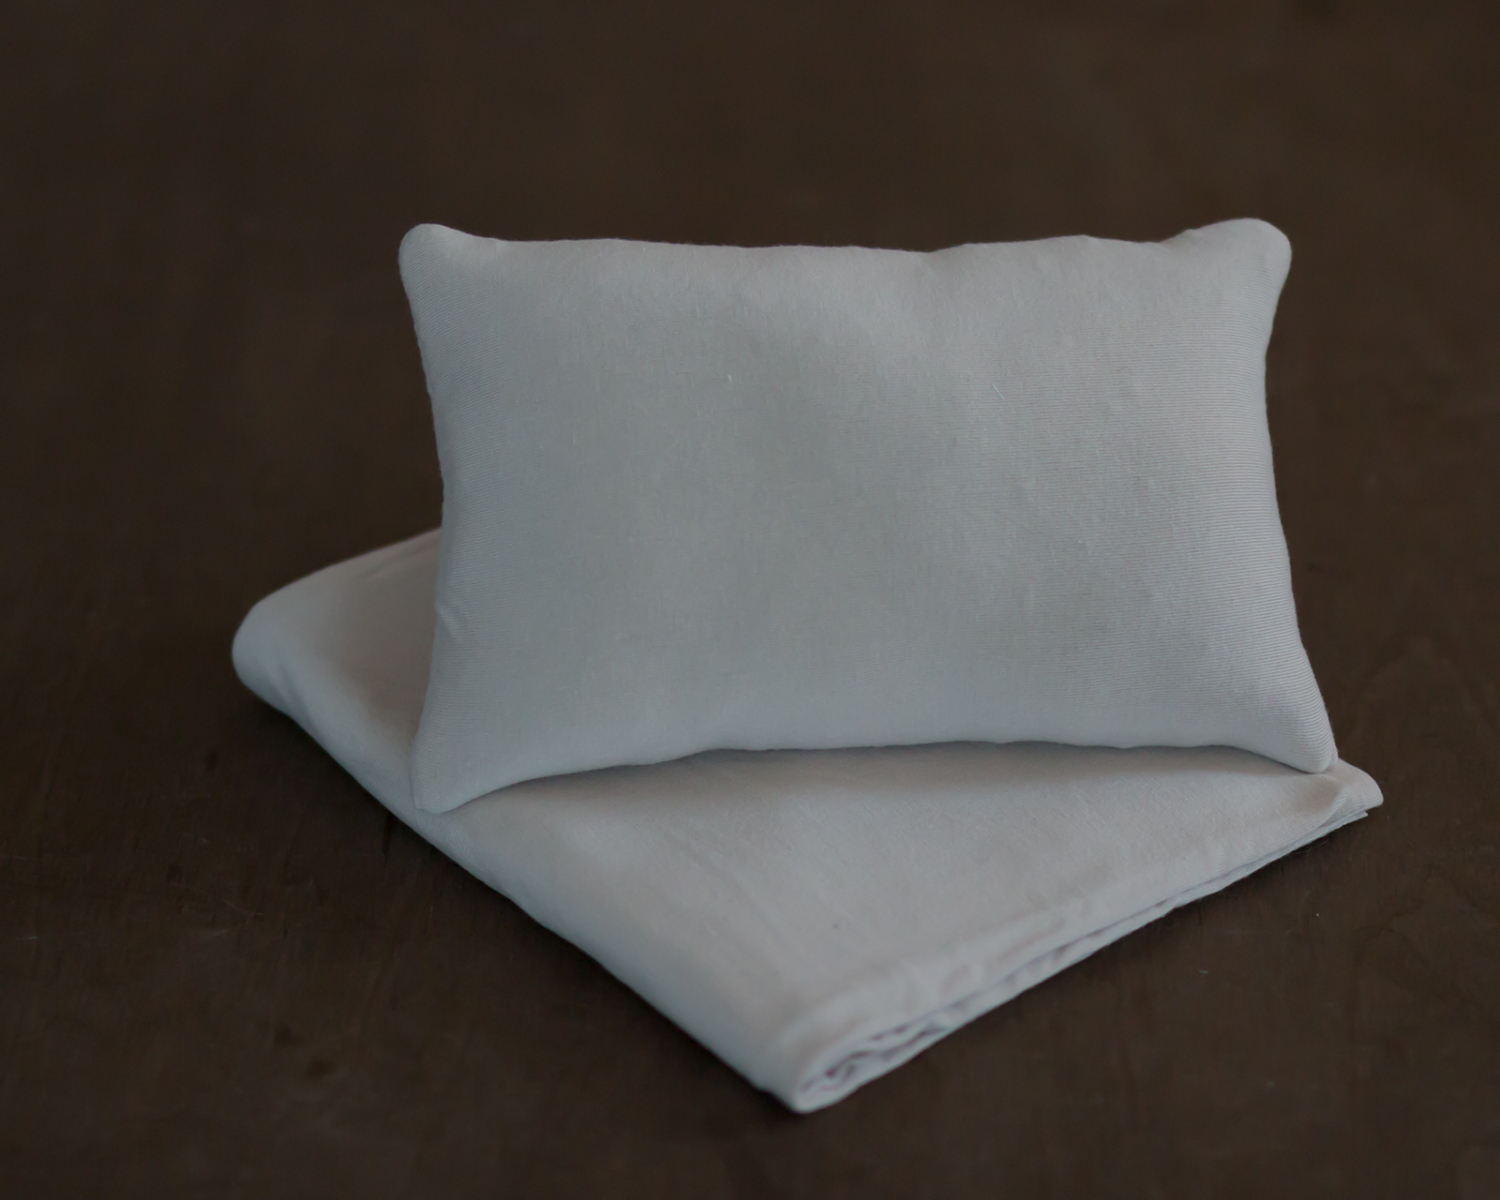 Cream posing pillow - newborn photo prop